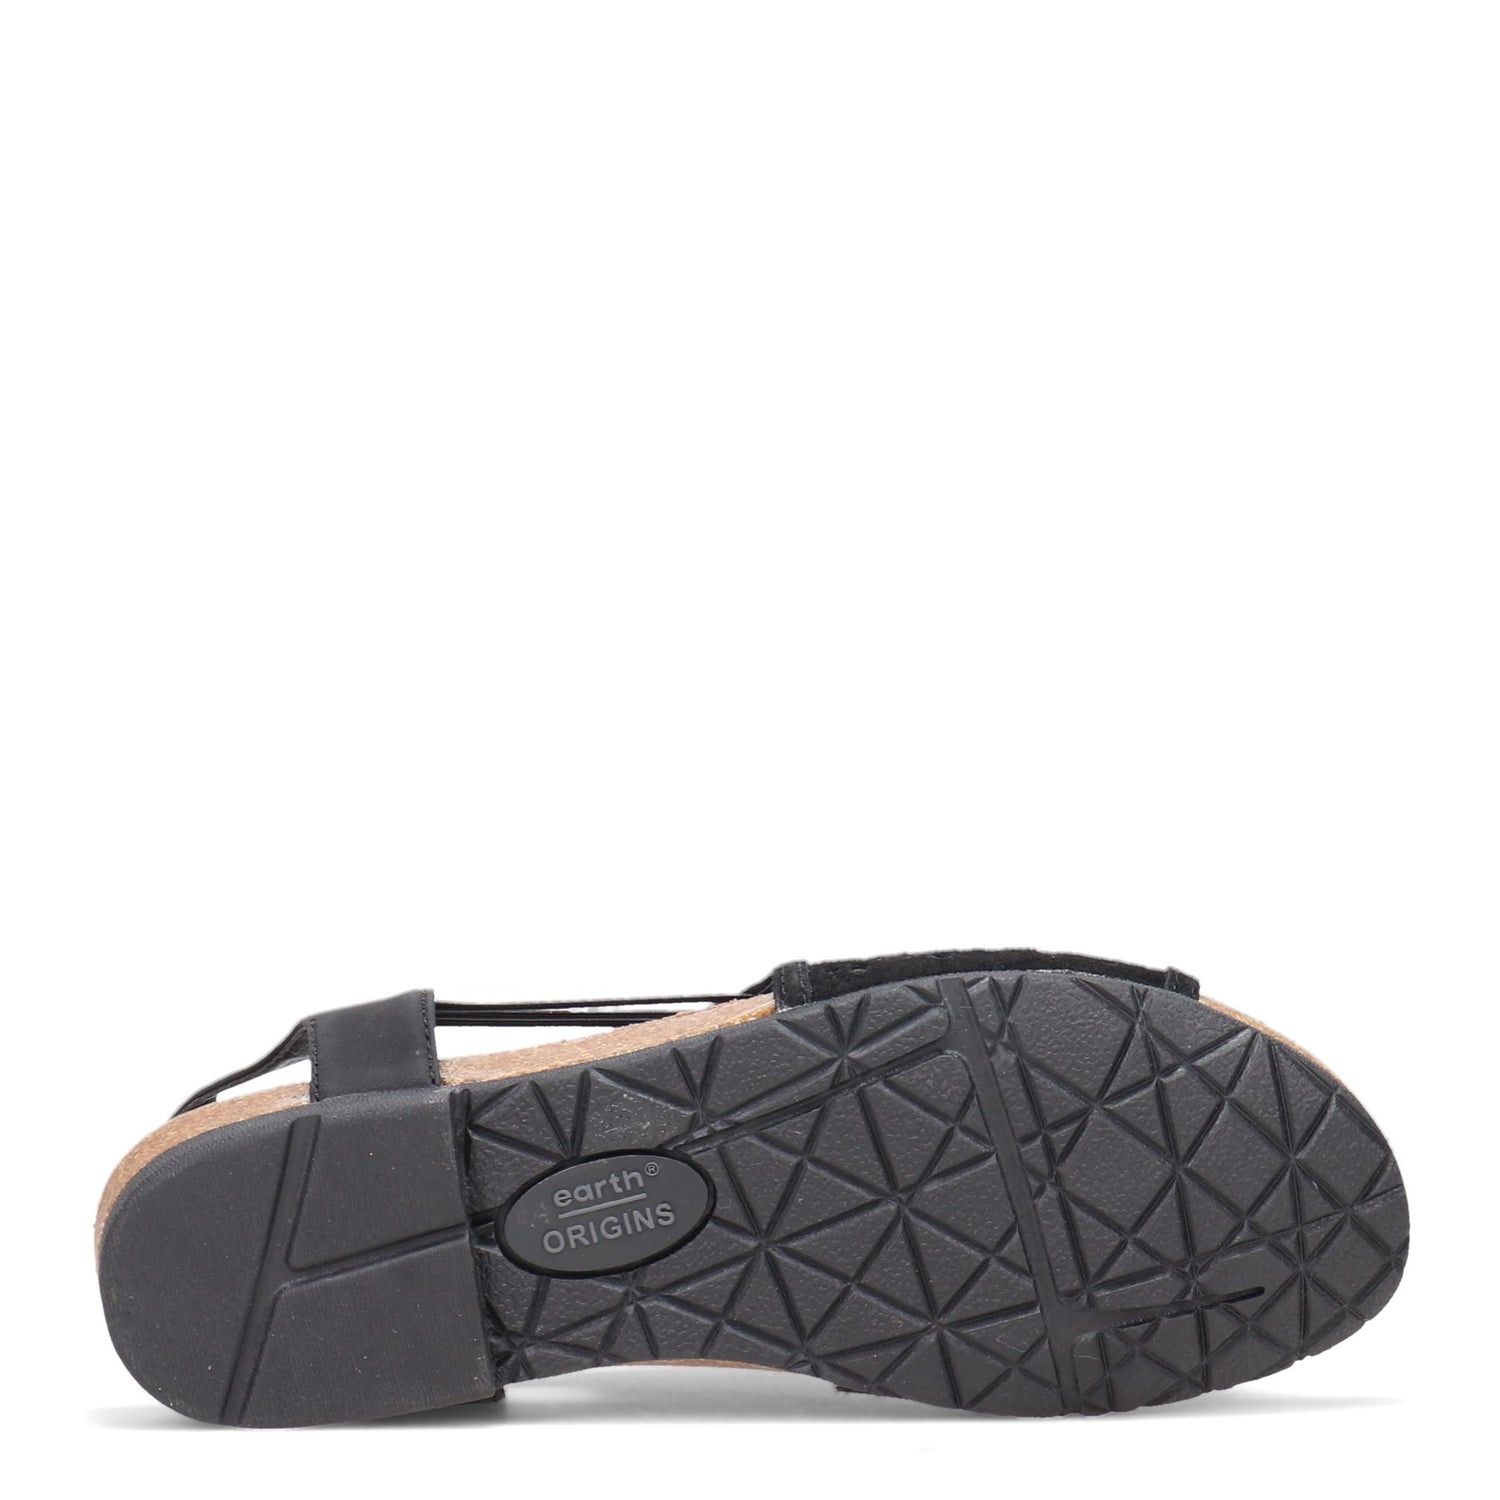 Peltz Shoes  Women's Earth Origins Lyla Sandal BLACK 251005W-BLACK